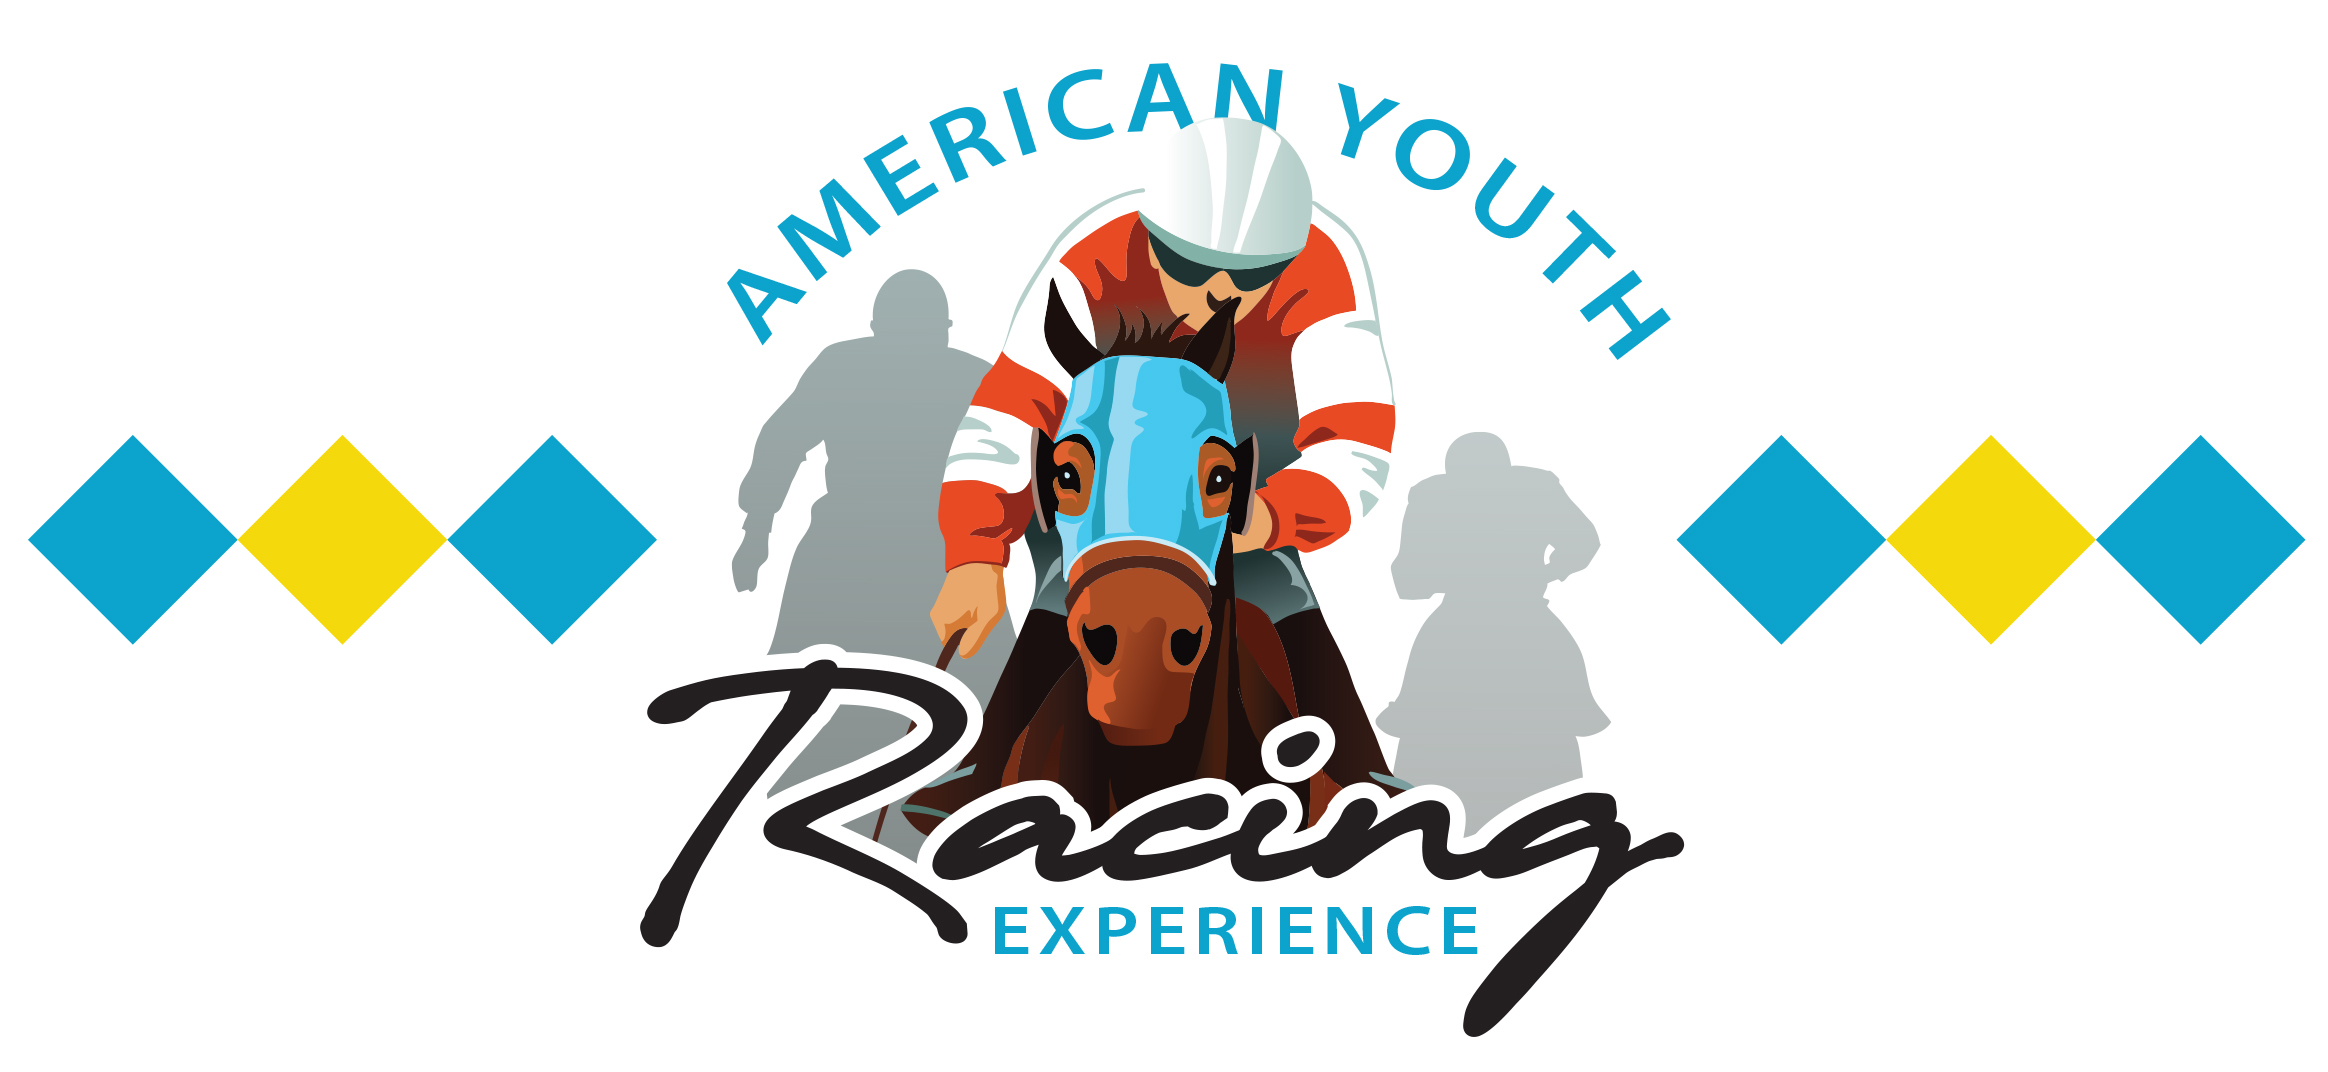 American Youth Racing Experience at Del Mar logo